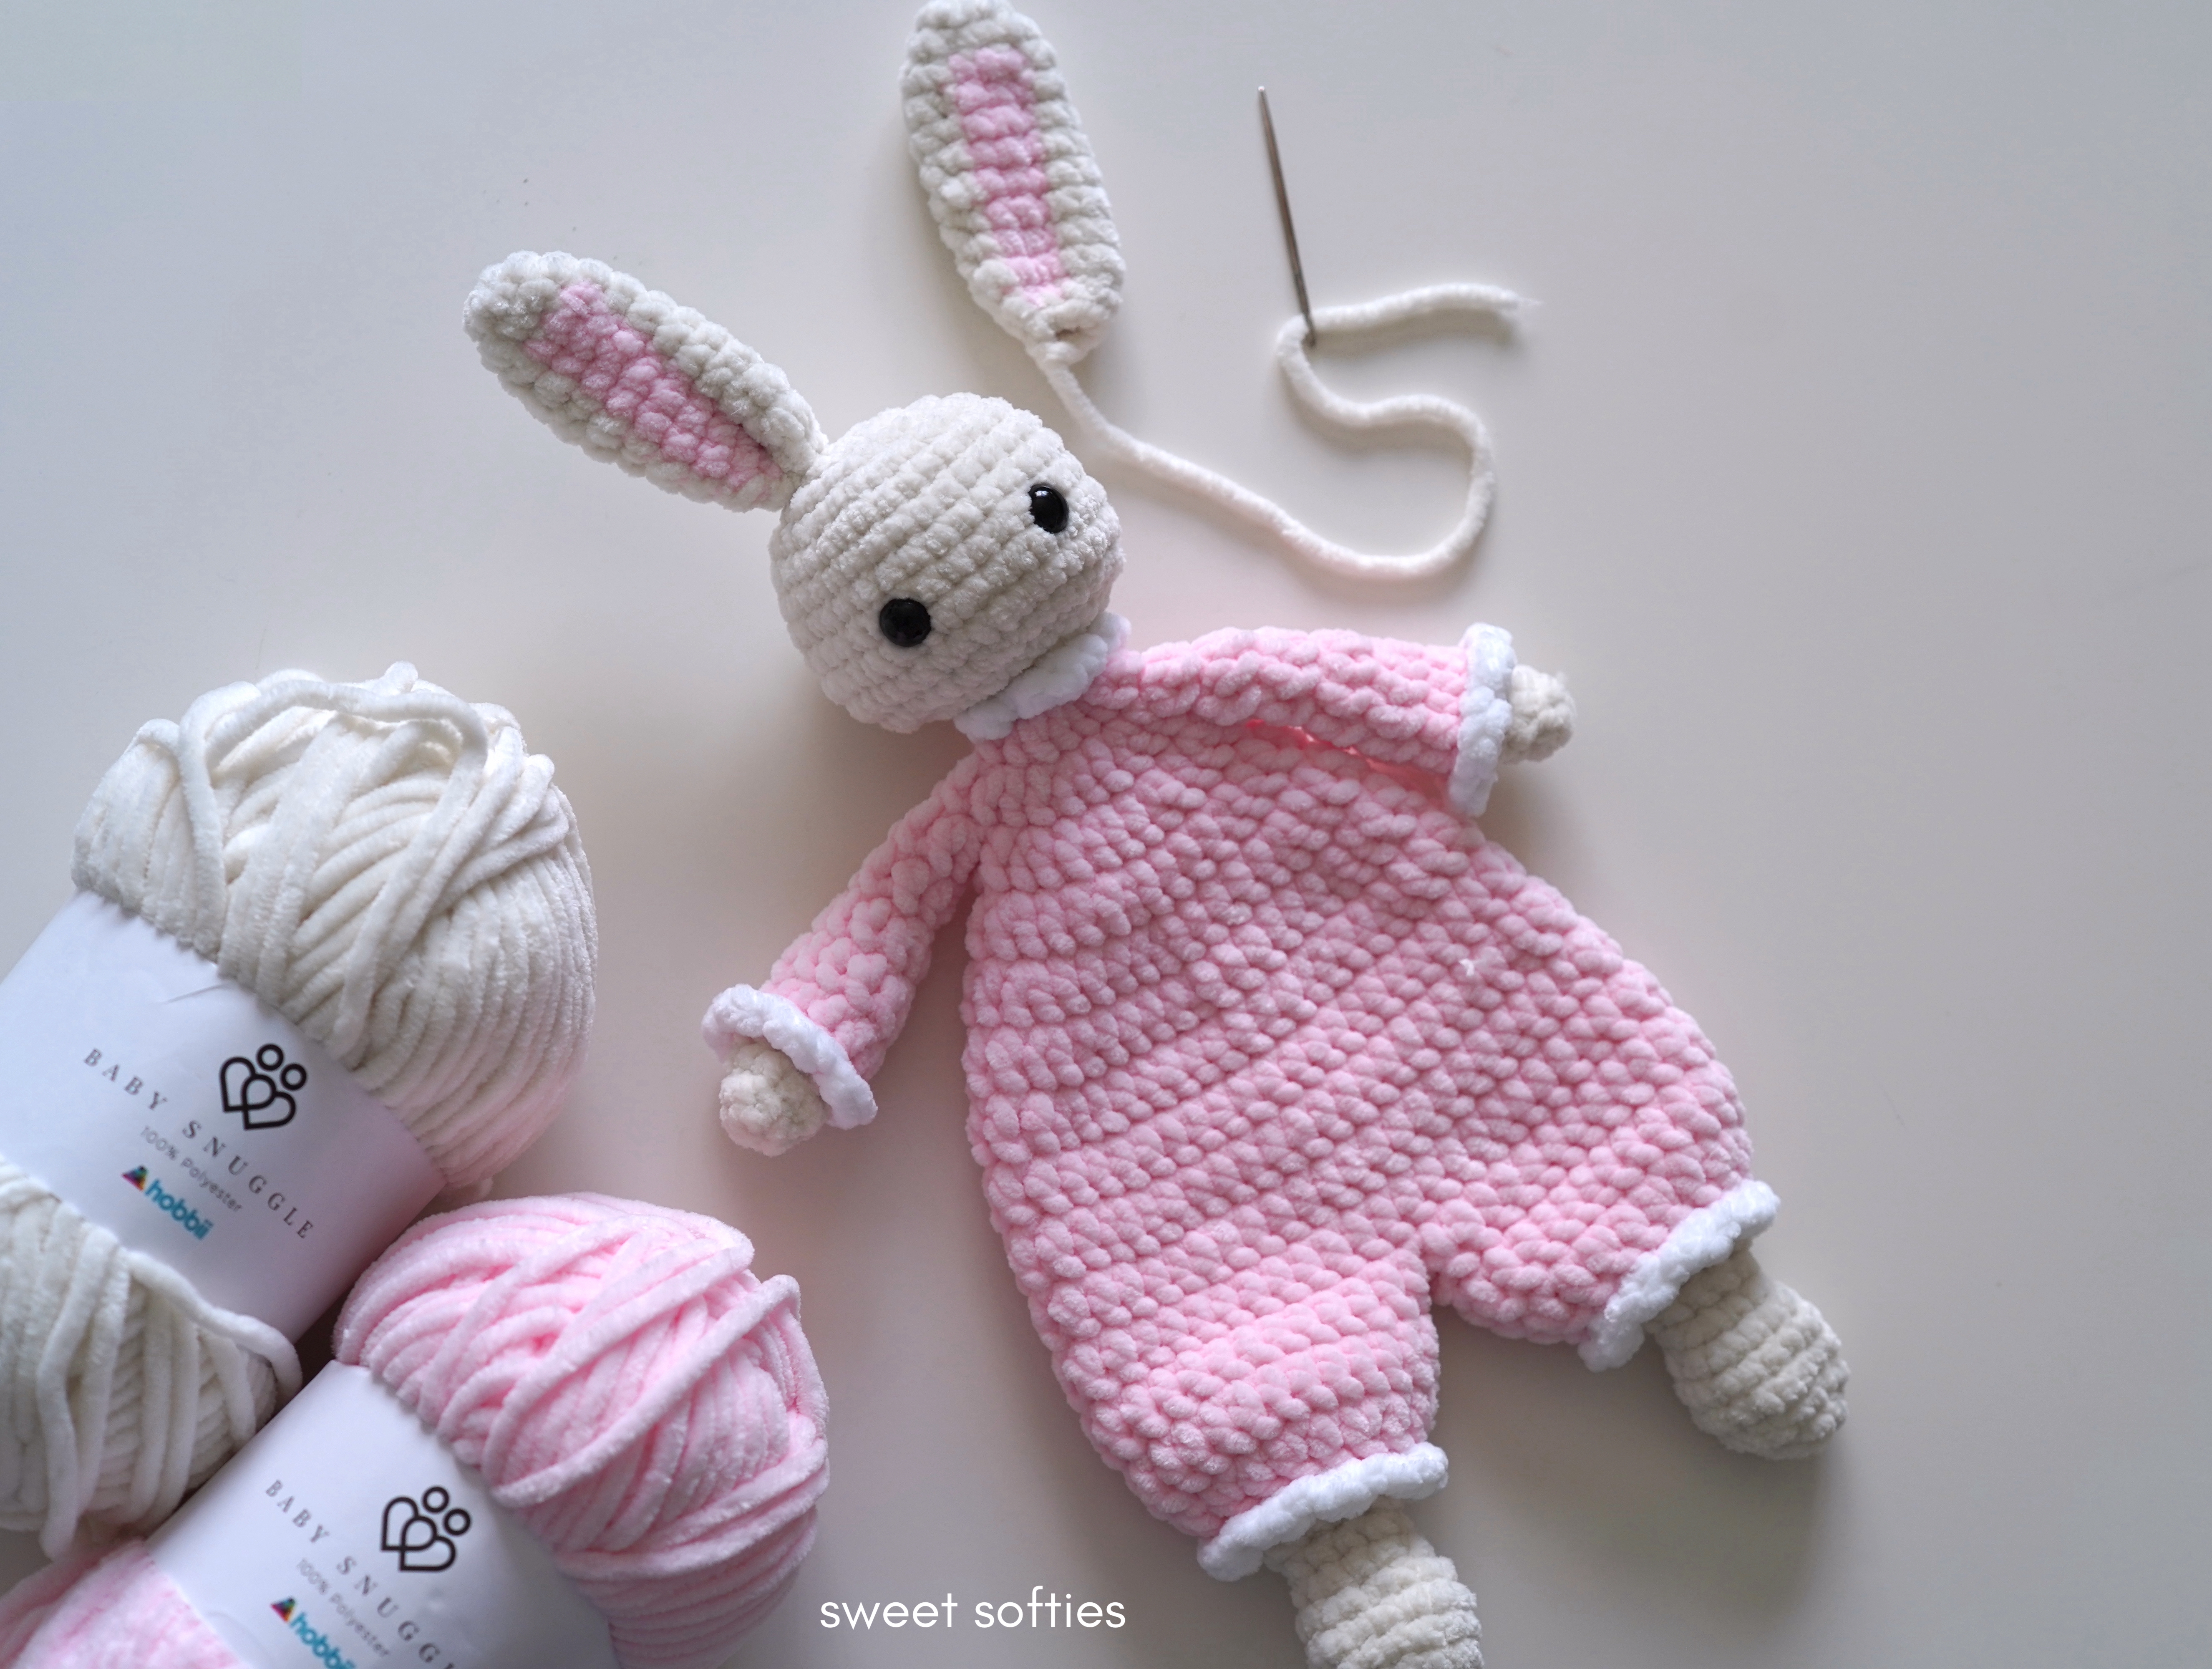 Crochet Ragdoll Friends: 36 New Dolls to Make - 9780811771702